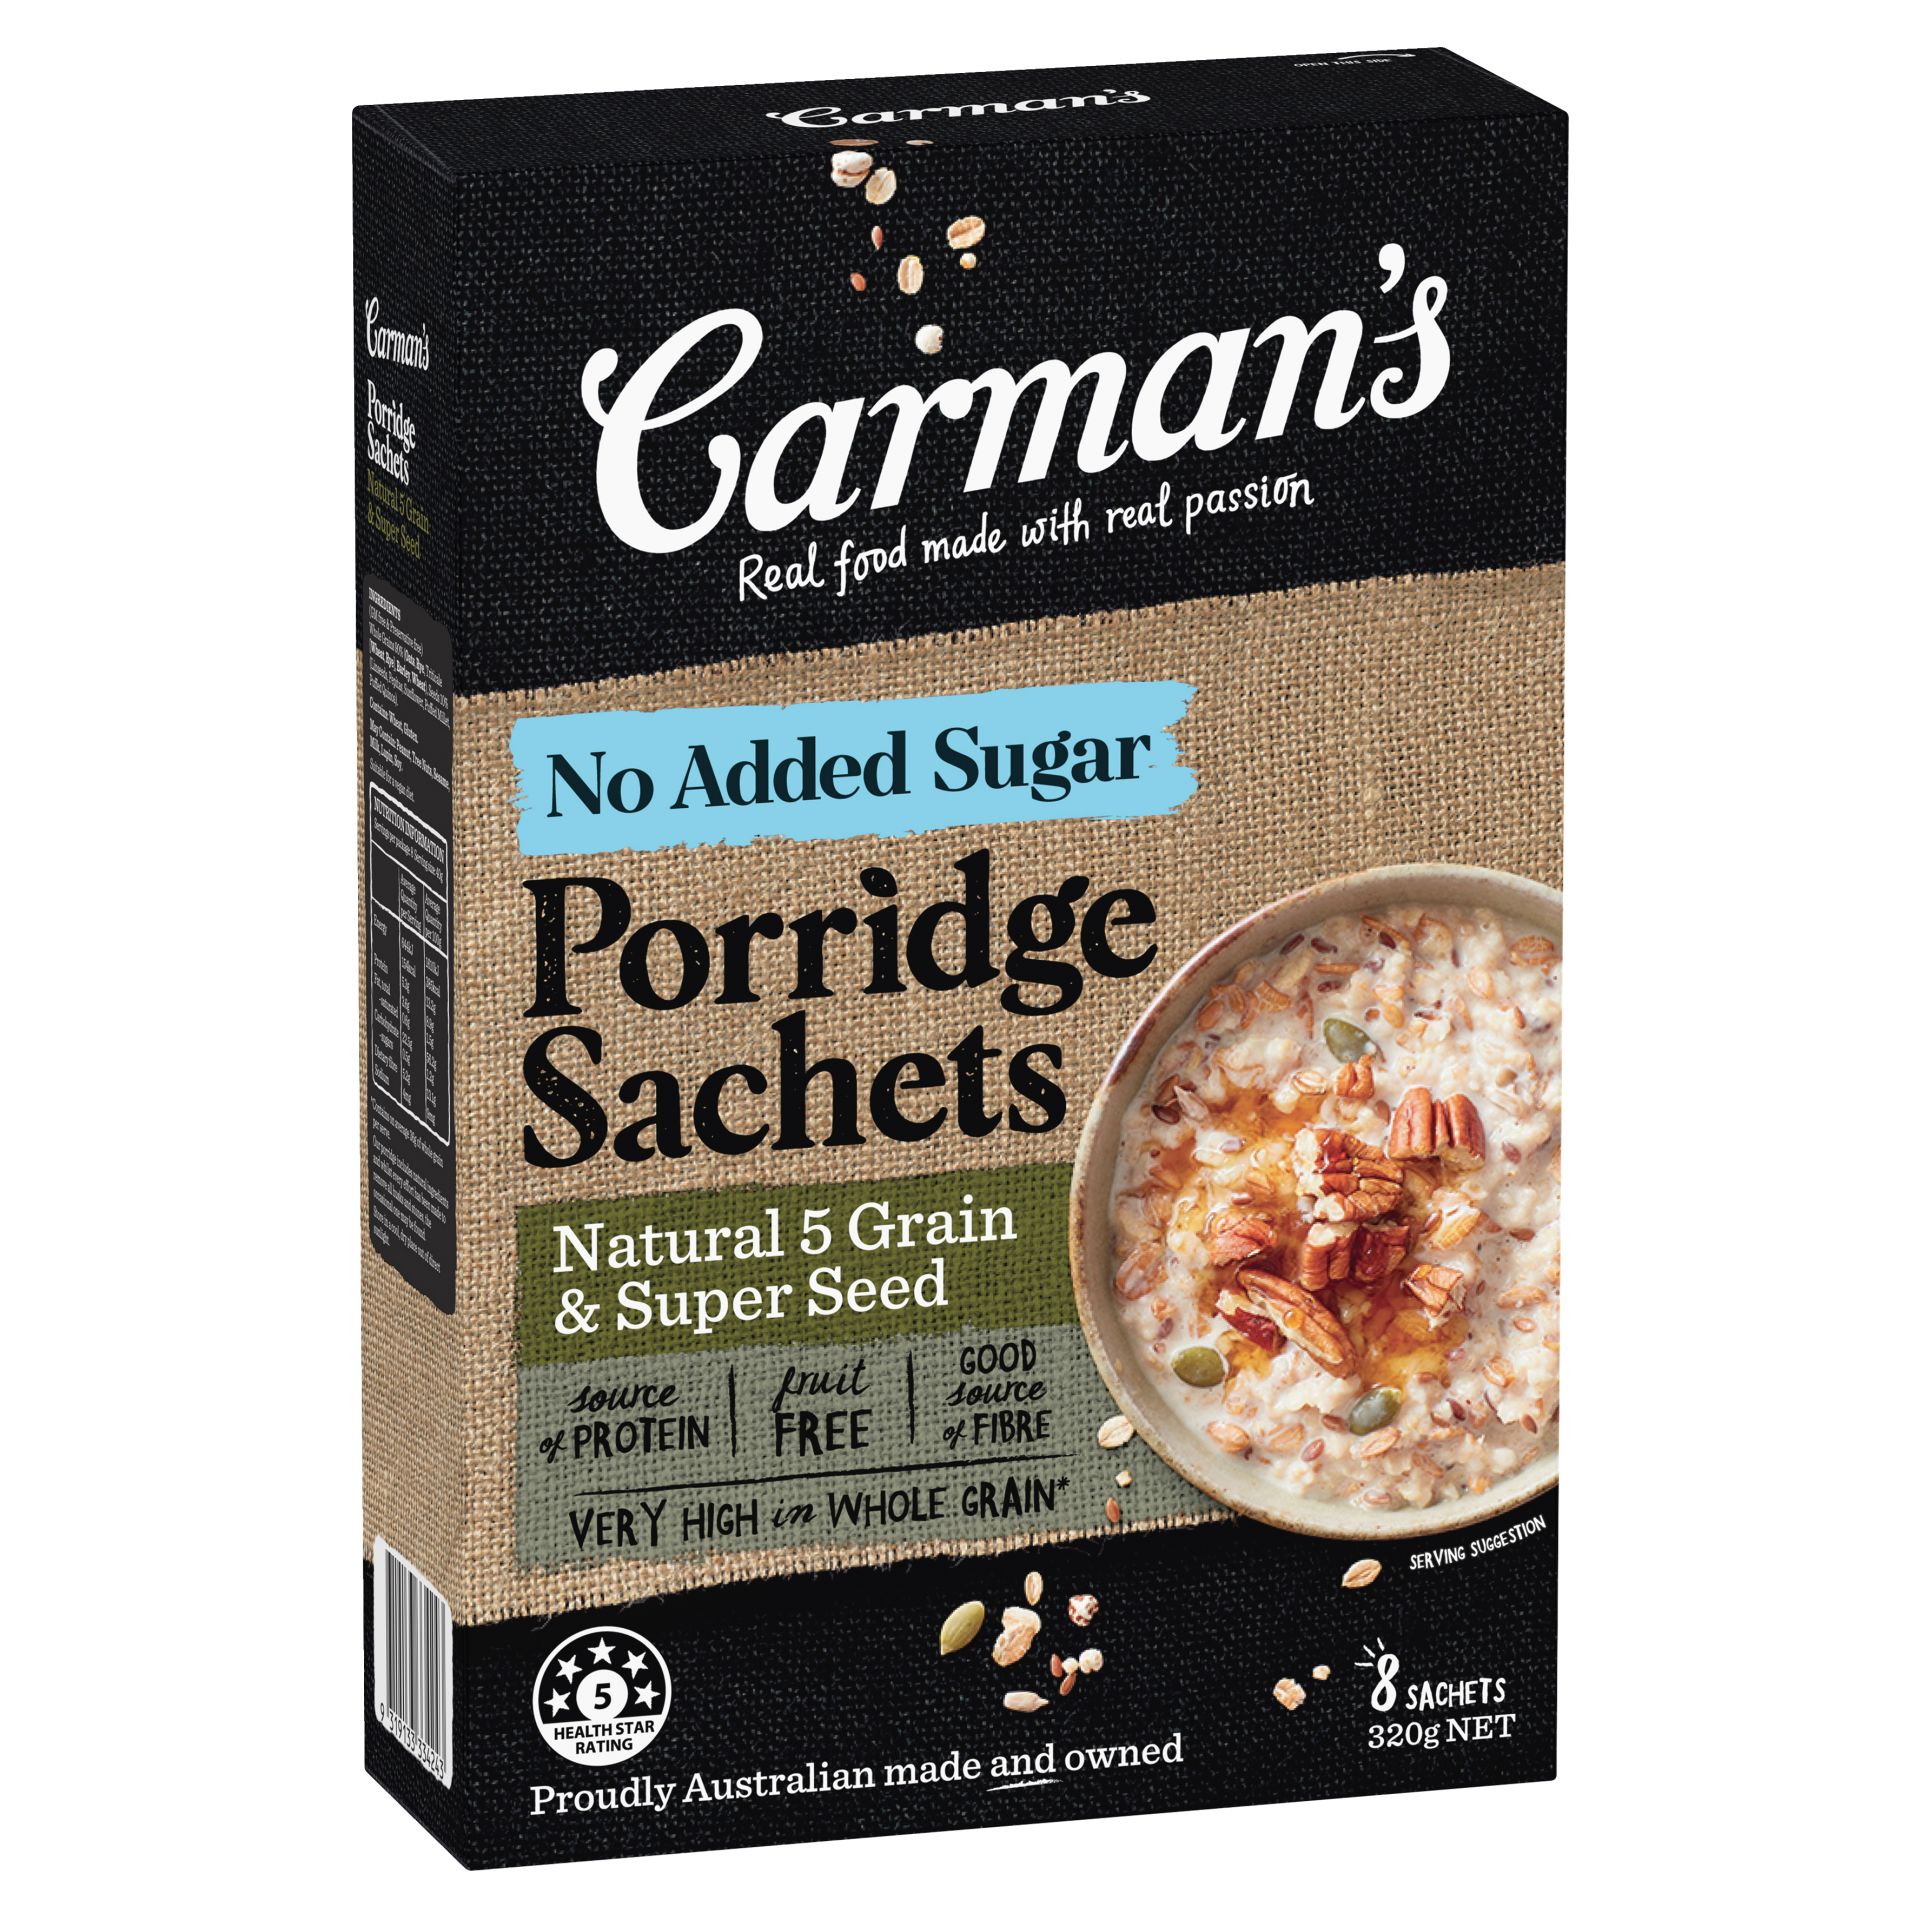 Natural 5 Grain & Super Seed Porridge Sachets